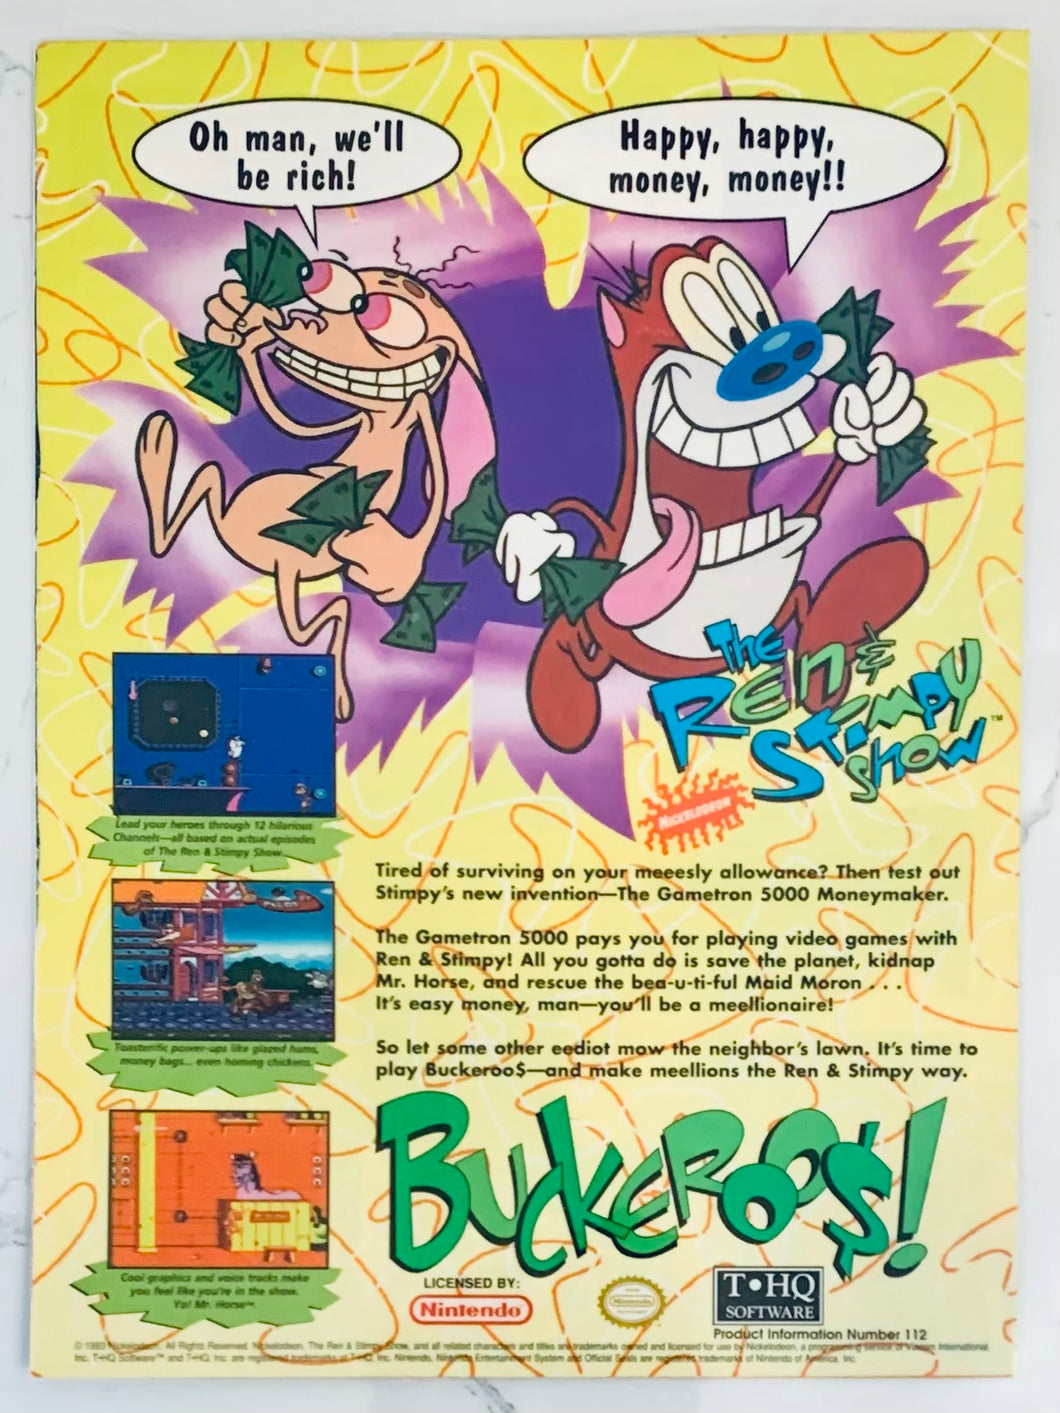 The Ren & Stimpy Show: Veediots! / Buckaroo - NES/SNES - Original Vintage Advertisement - Print Ads - Laminated A4 Poster